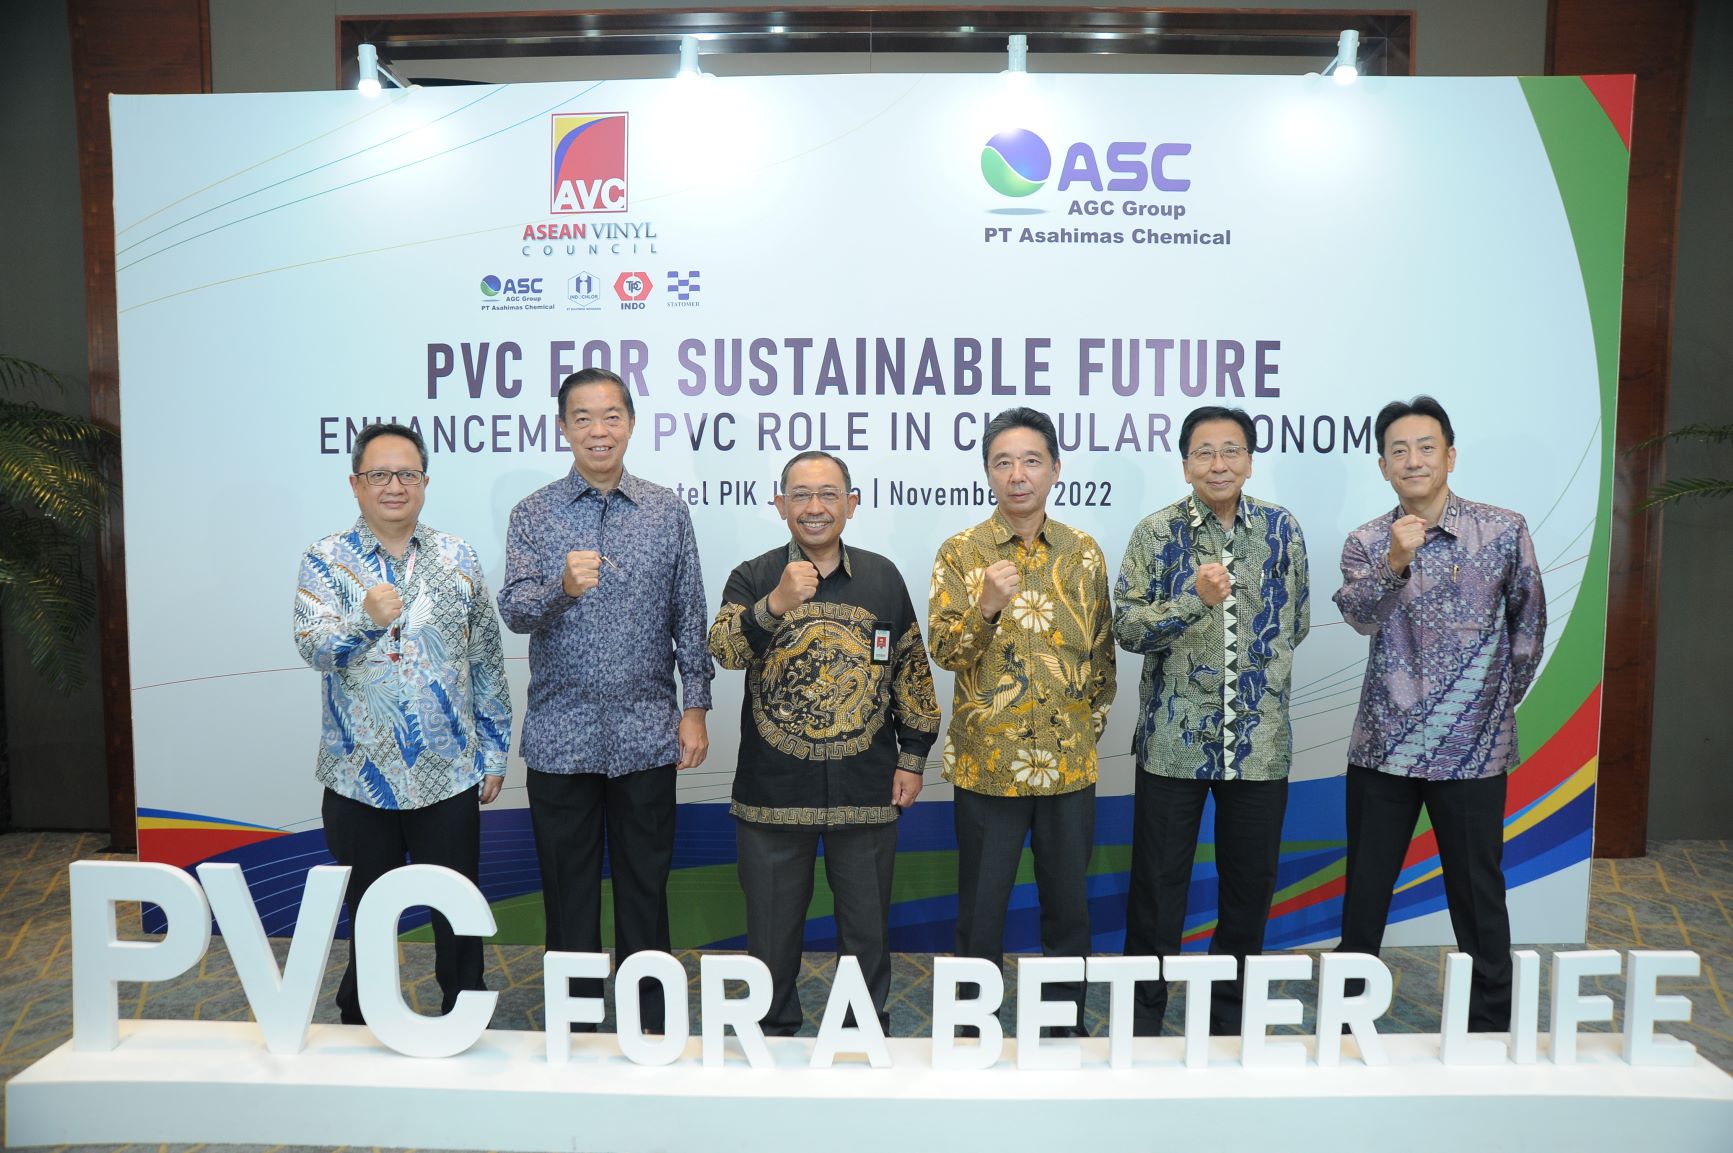  Asean Vinyl Council and PT. Asahimas Chemical Host an International Seminar